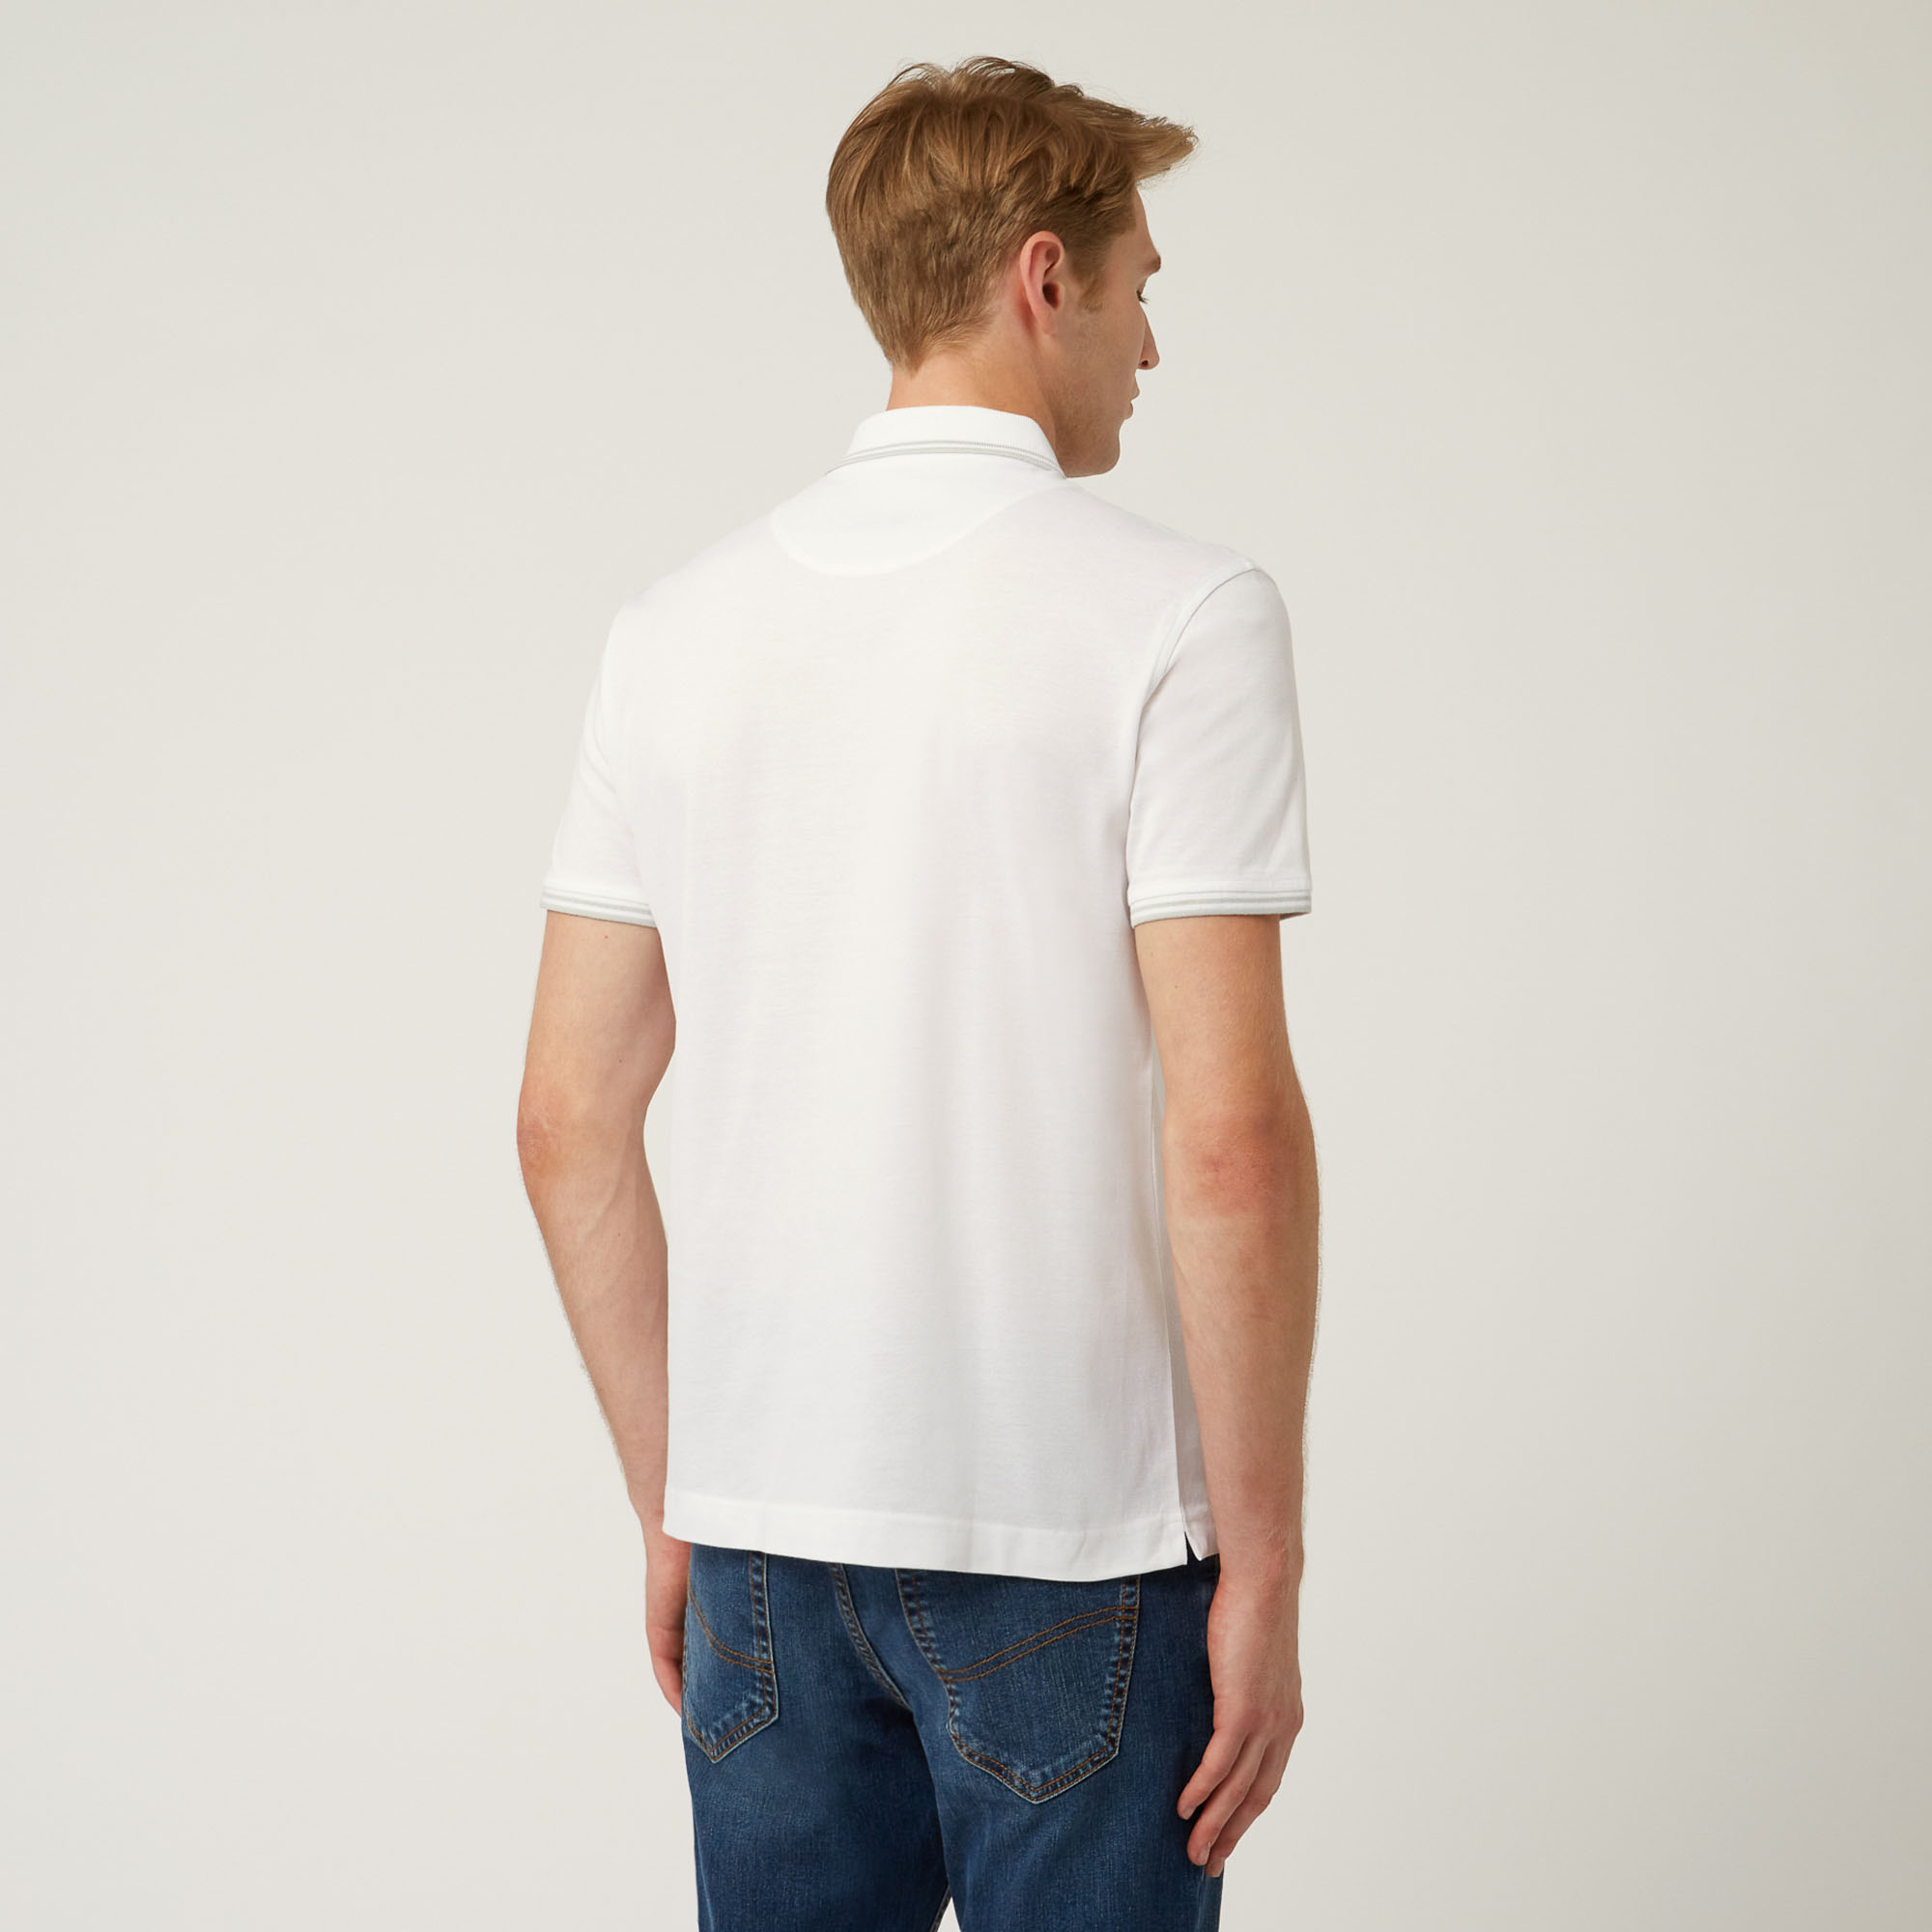 Essentials polo shirt in plain coloured cotton